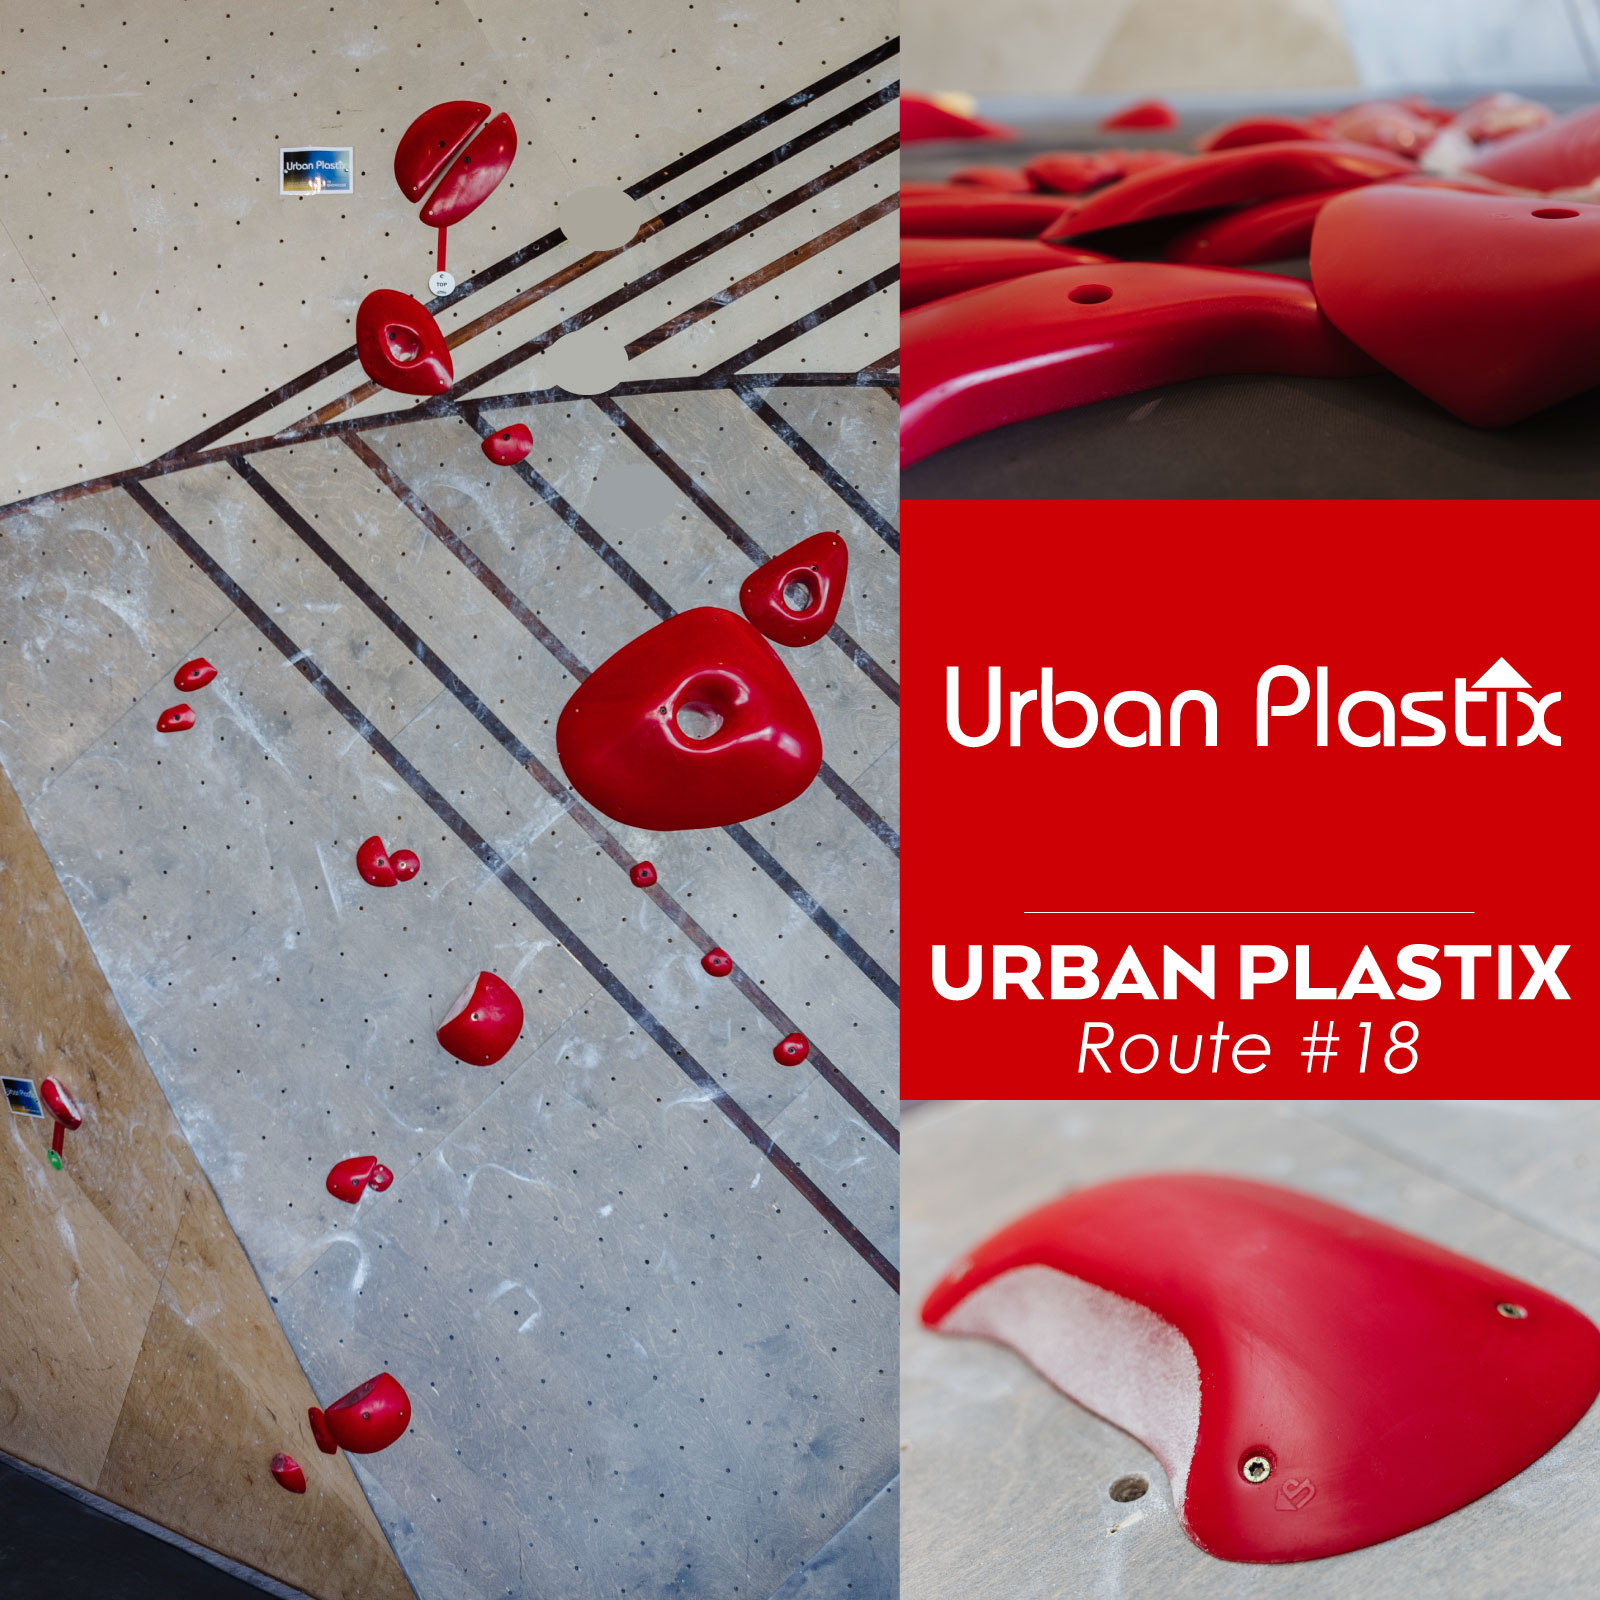 Urban Plastix